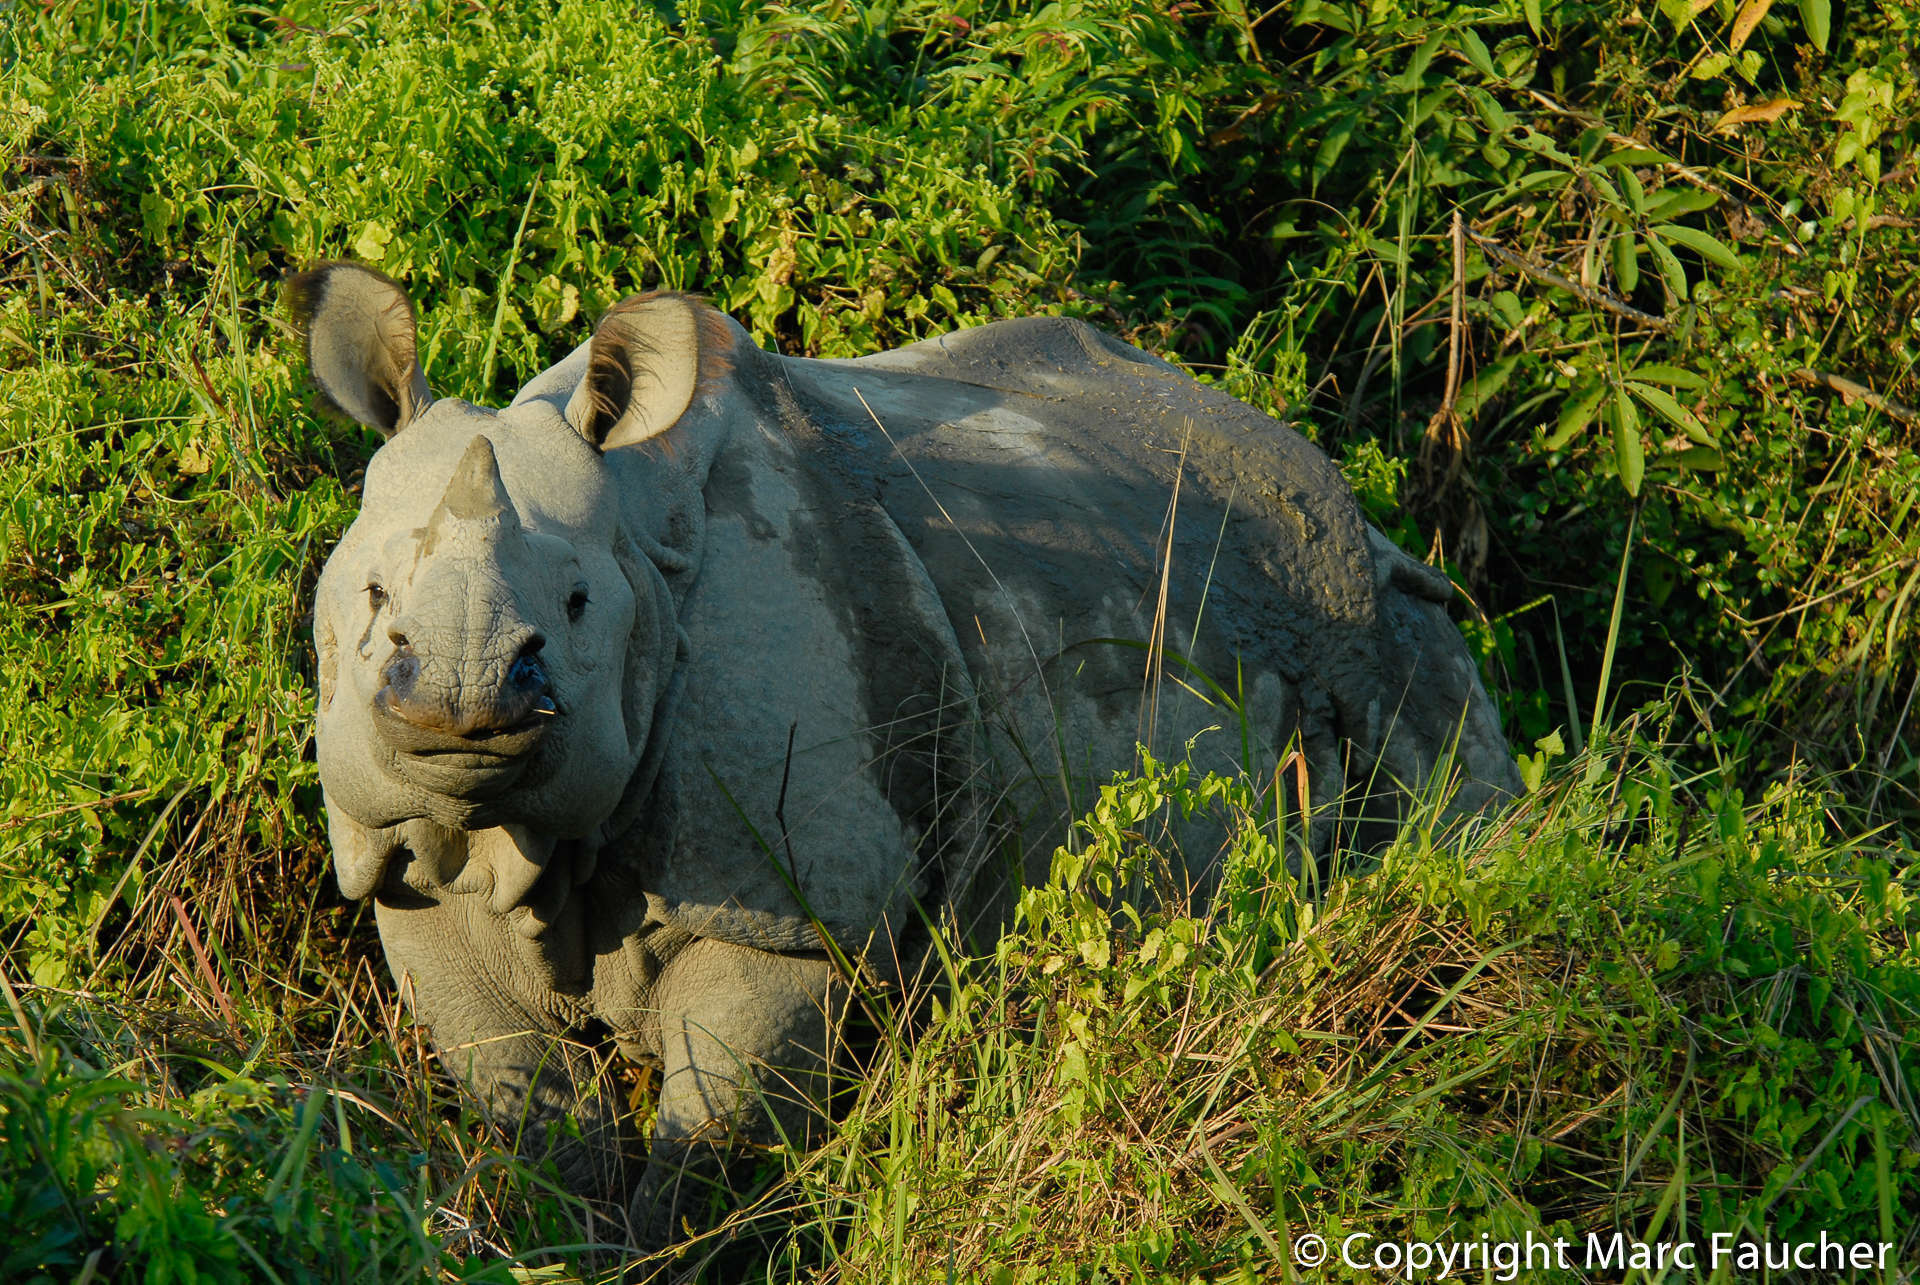 Image of Indian Rhinoceros